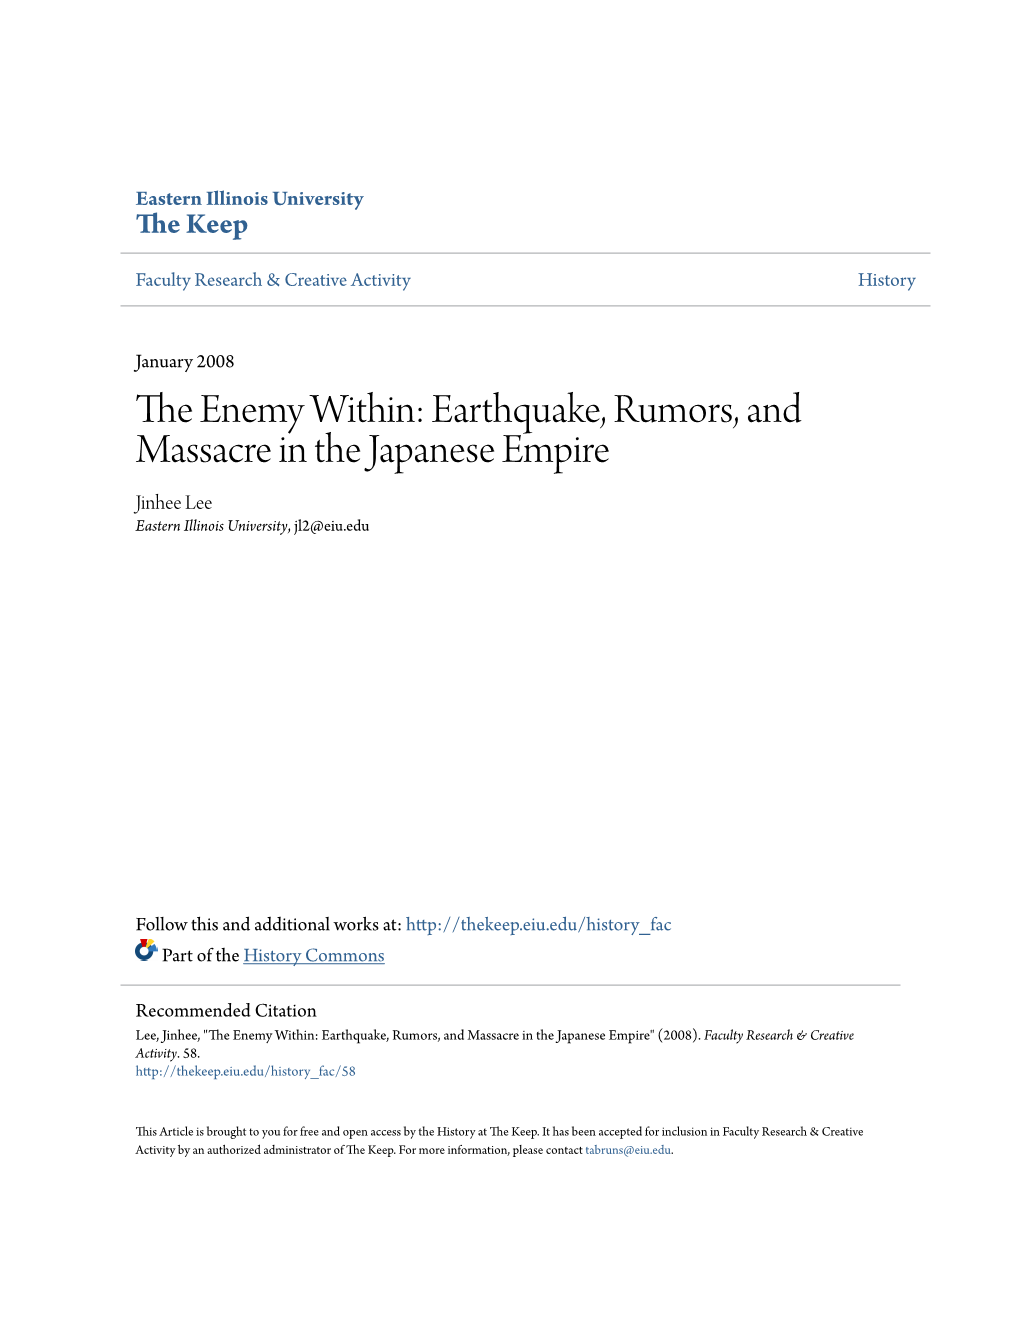 Earthquake, Rumors, and Massacre in the Japanese Empire Jinhee Lee Eastern Illinois University, Jl2@Eiu.Edu